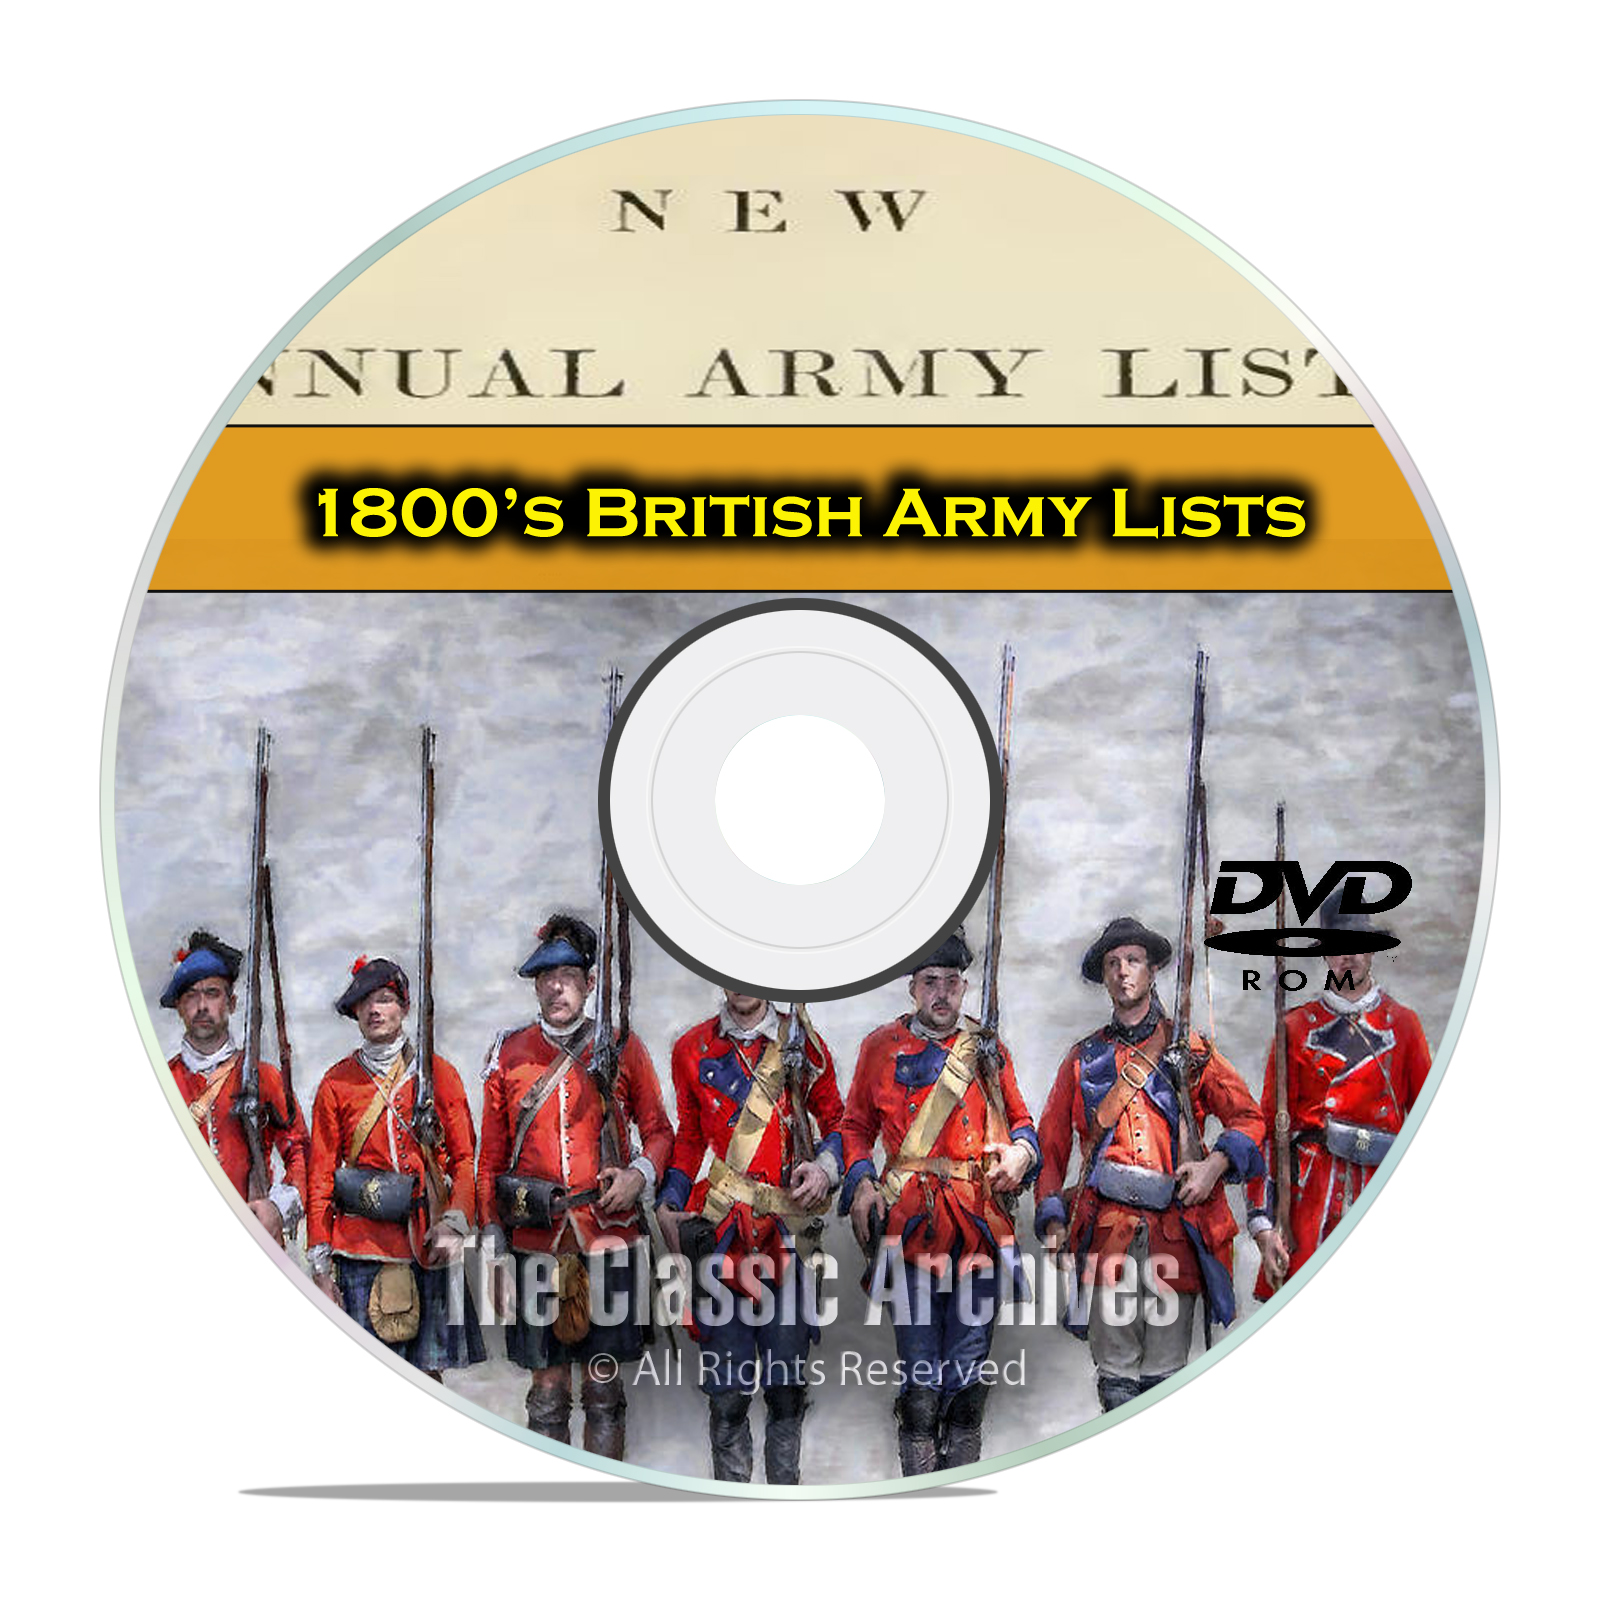 1800's British Army Lists, 1840-1899, 43 Volumes of British History PDF DVD